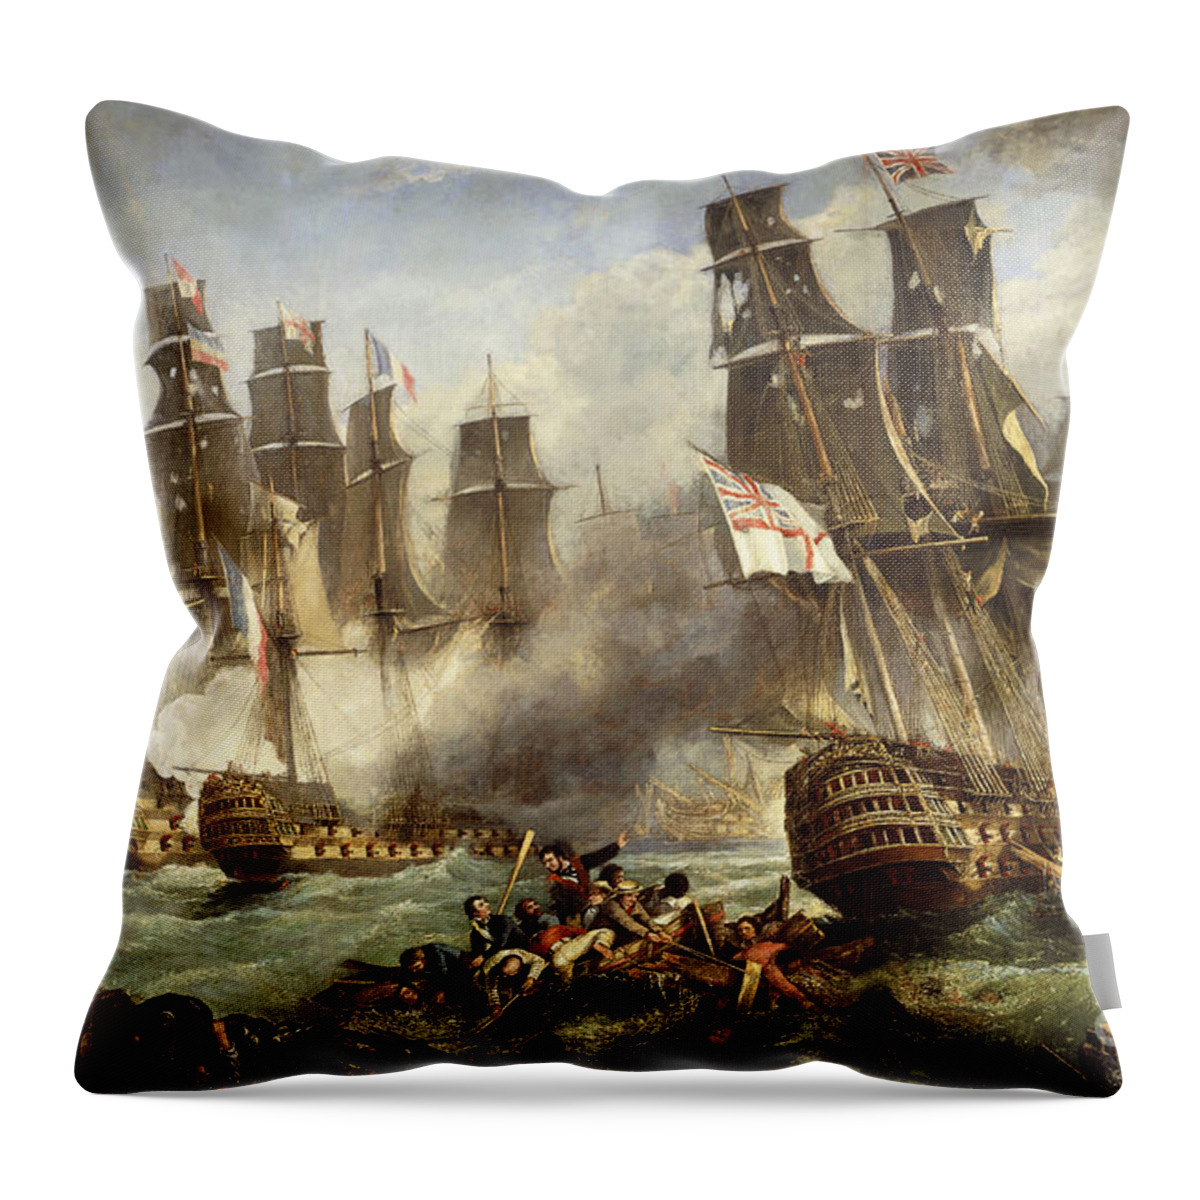  Battle Of Trafalgar Throw Pillow featuring the painting The Battle of Trafalgar by English School